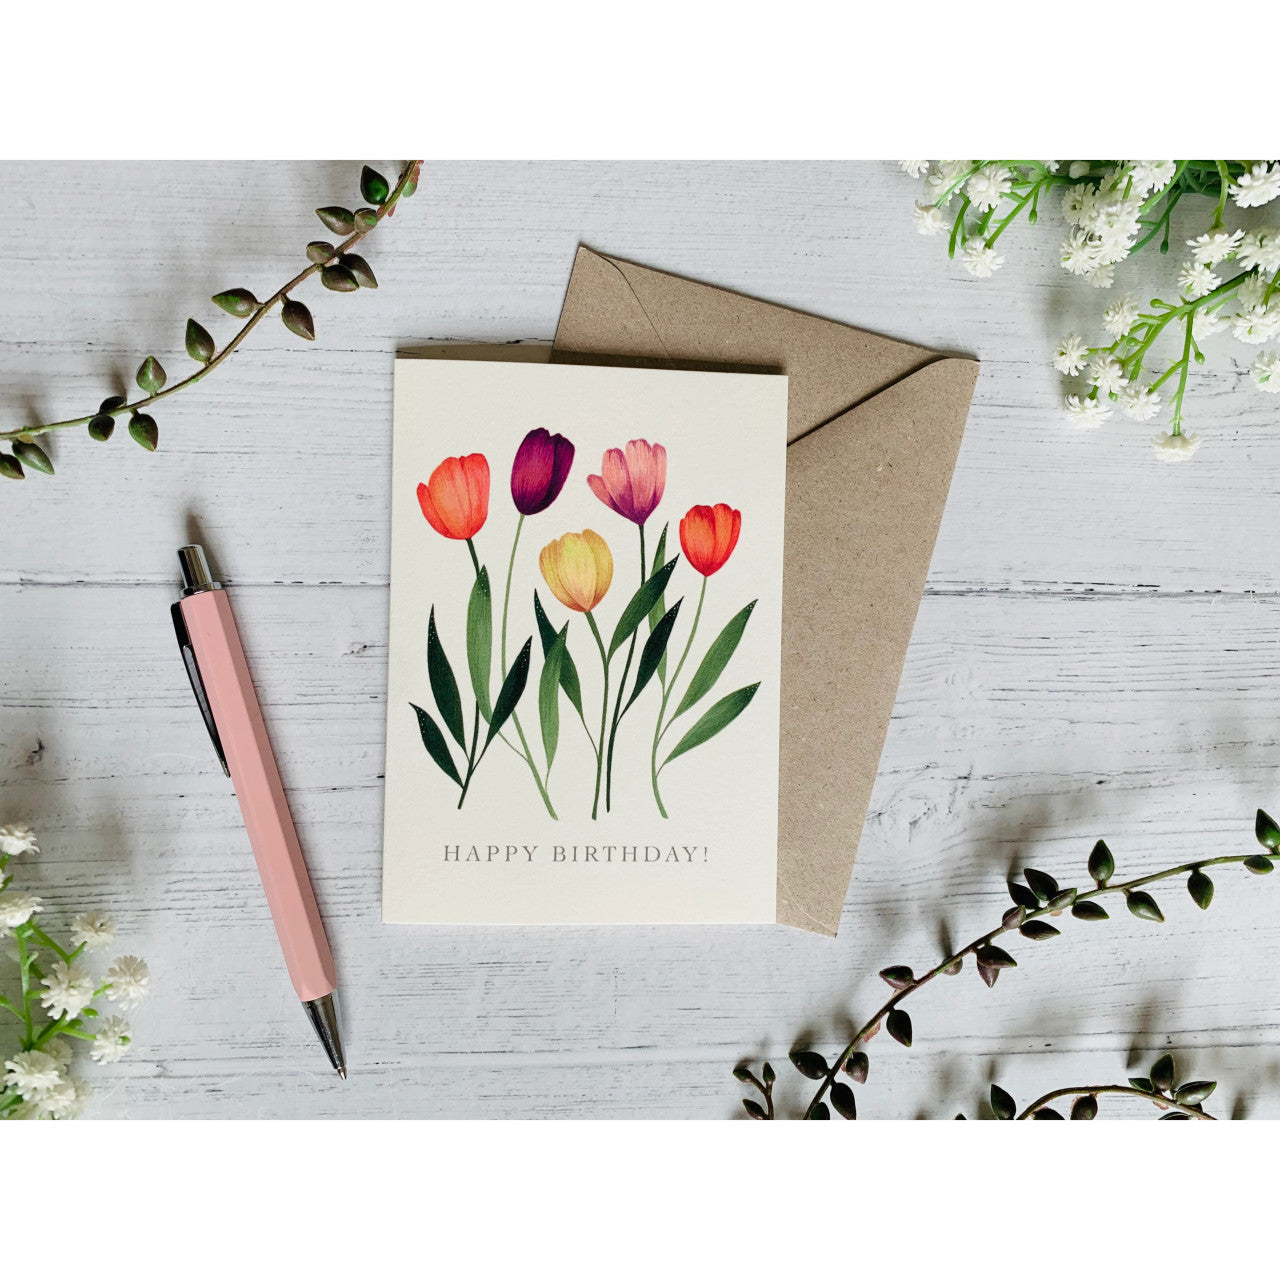 Happy Birthday Tulips Greeting card by Becky Amelia.